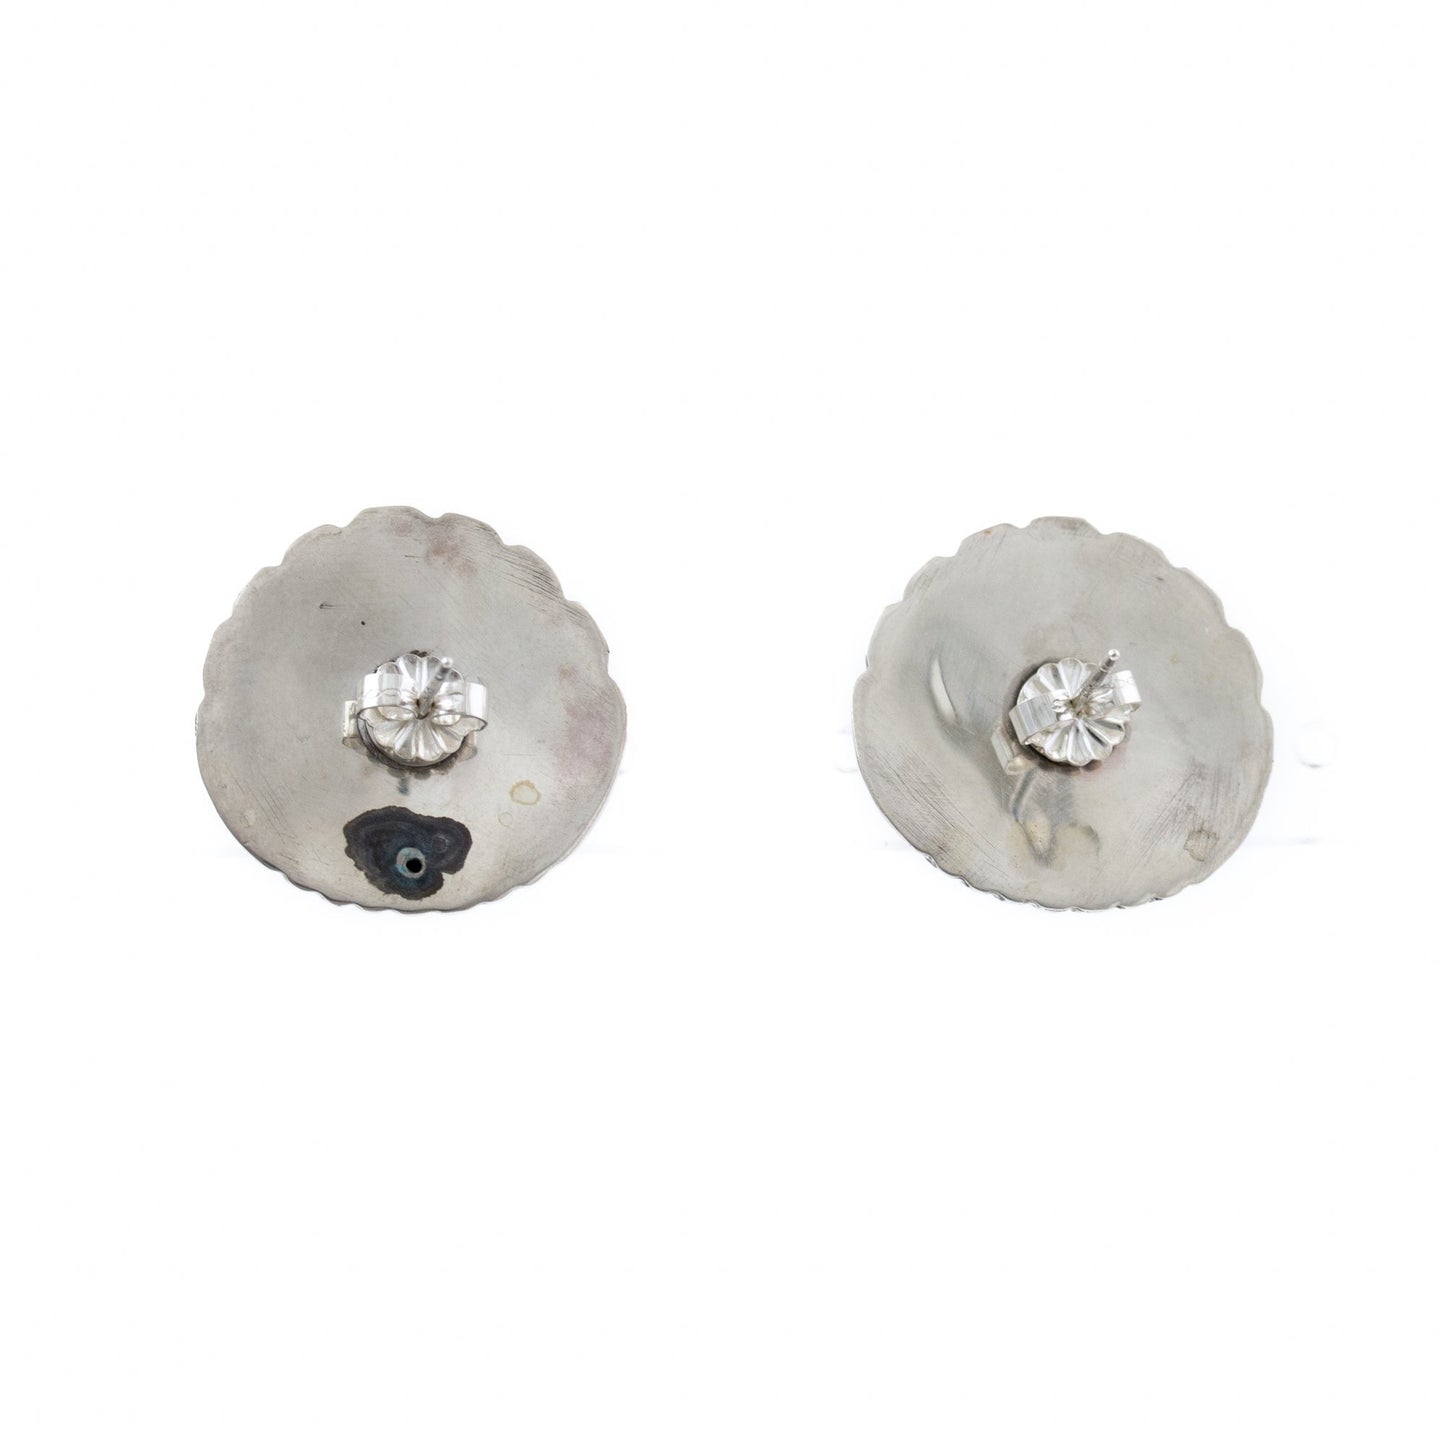 Textured Silver Shell Earrings - Kingdom Jewelry